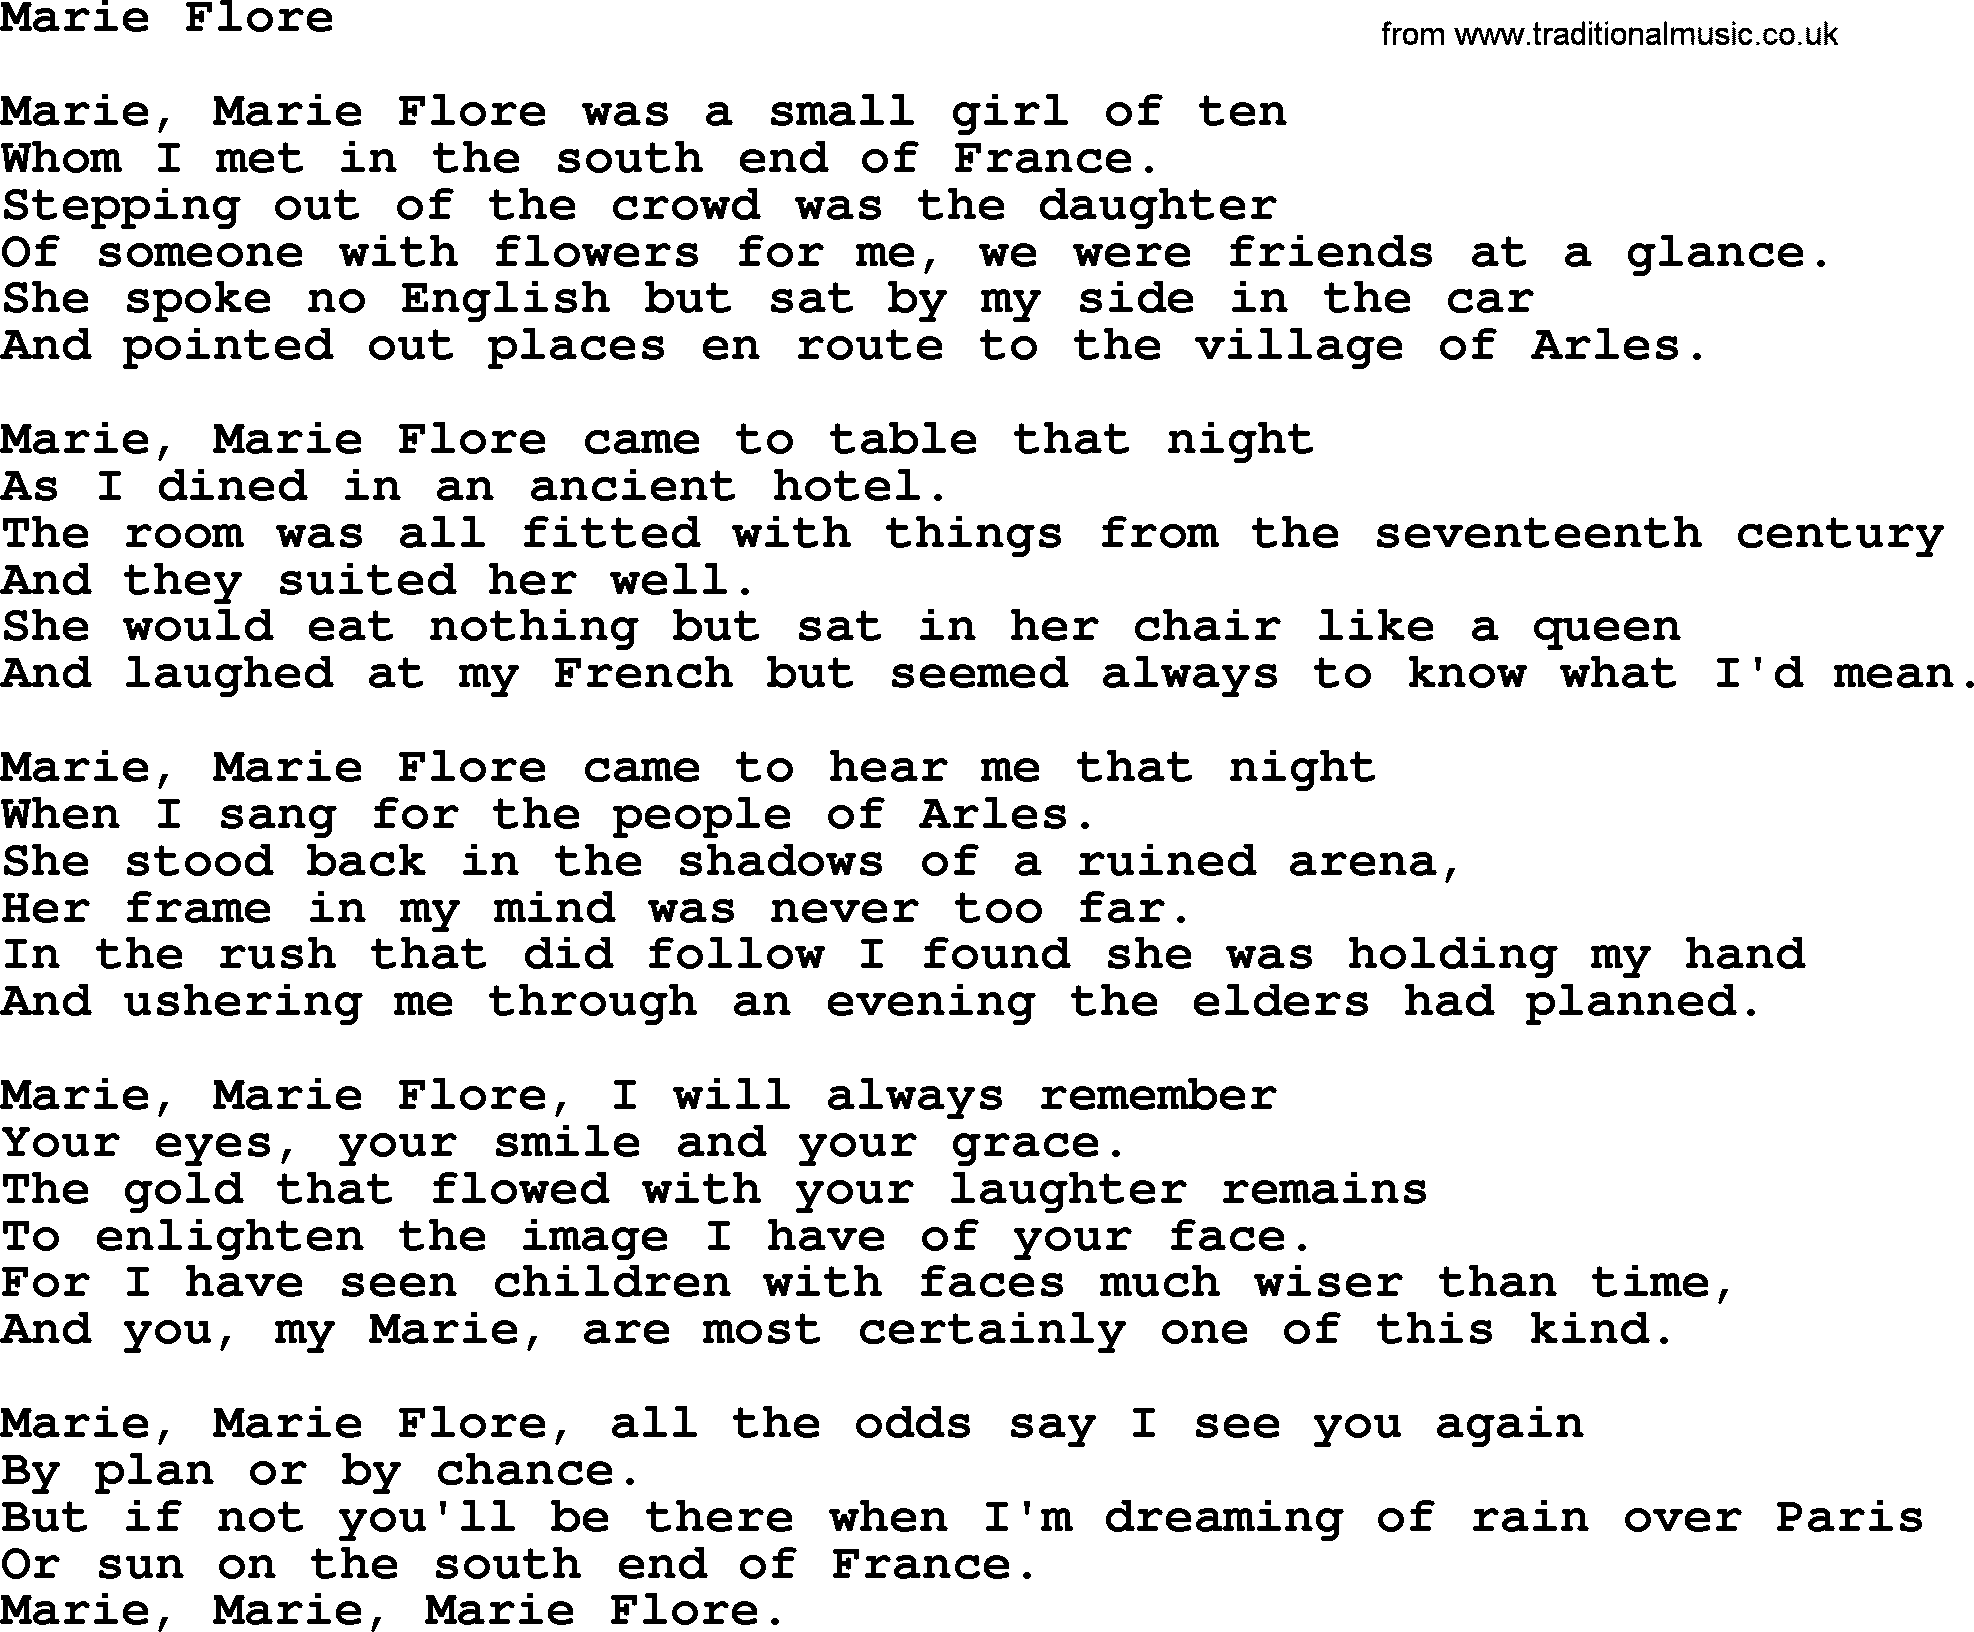 Joan Baez song Marie Flore, lyrics